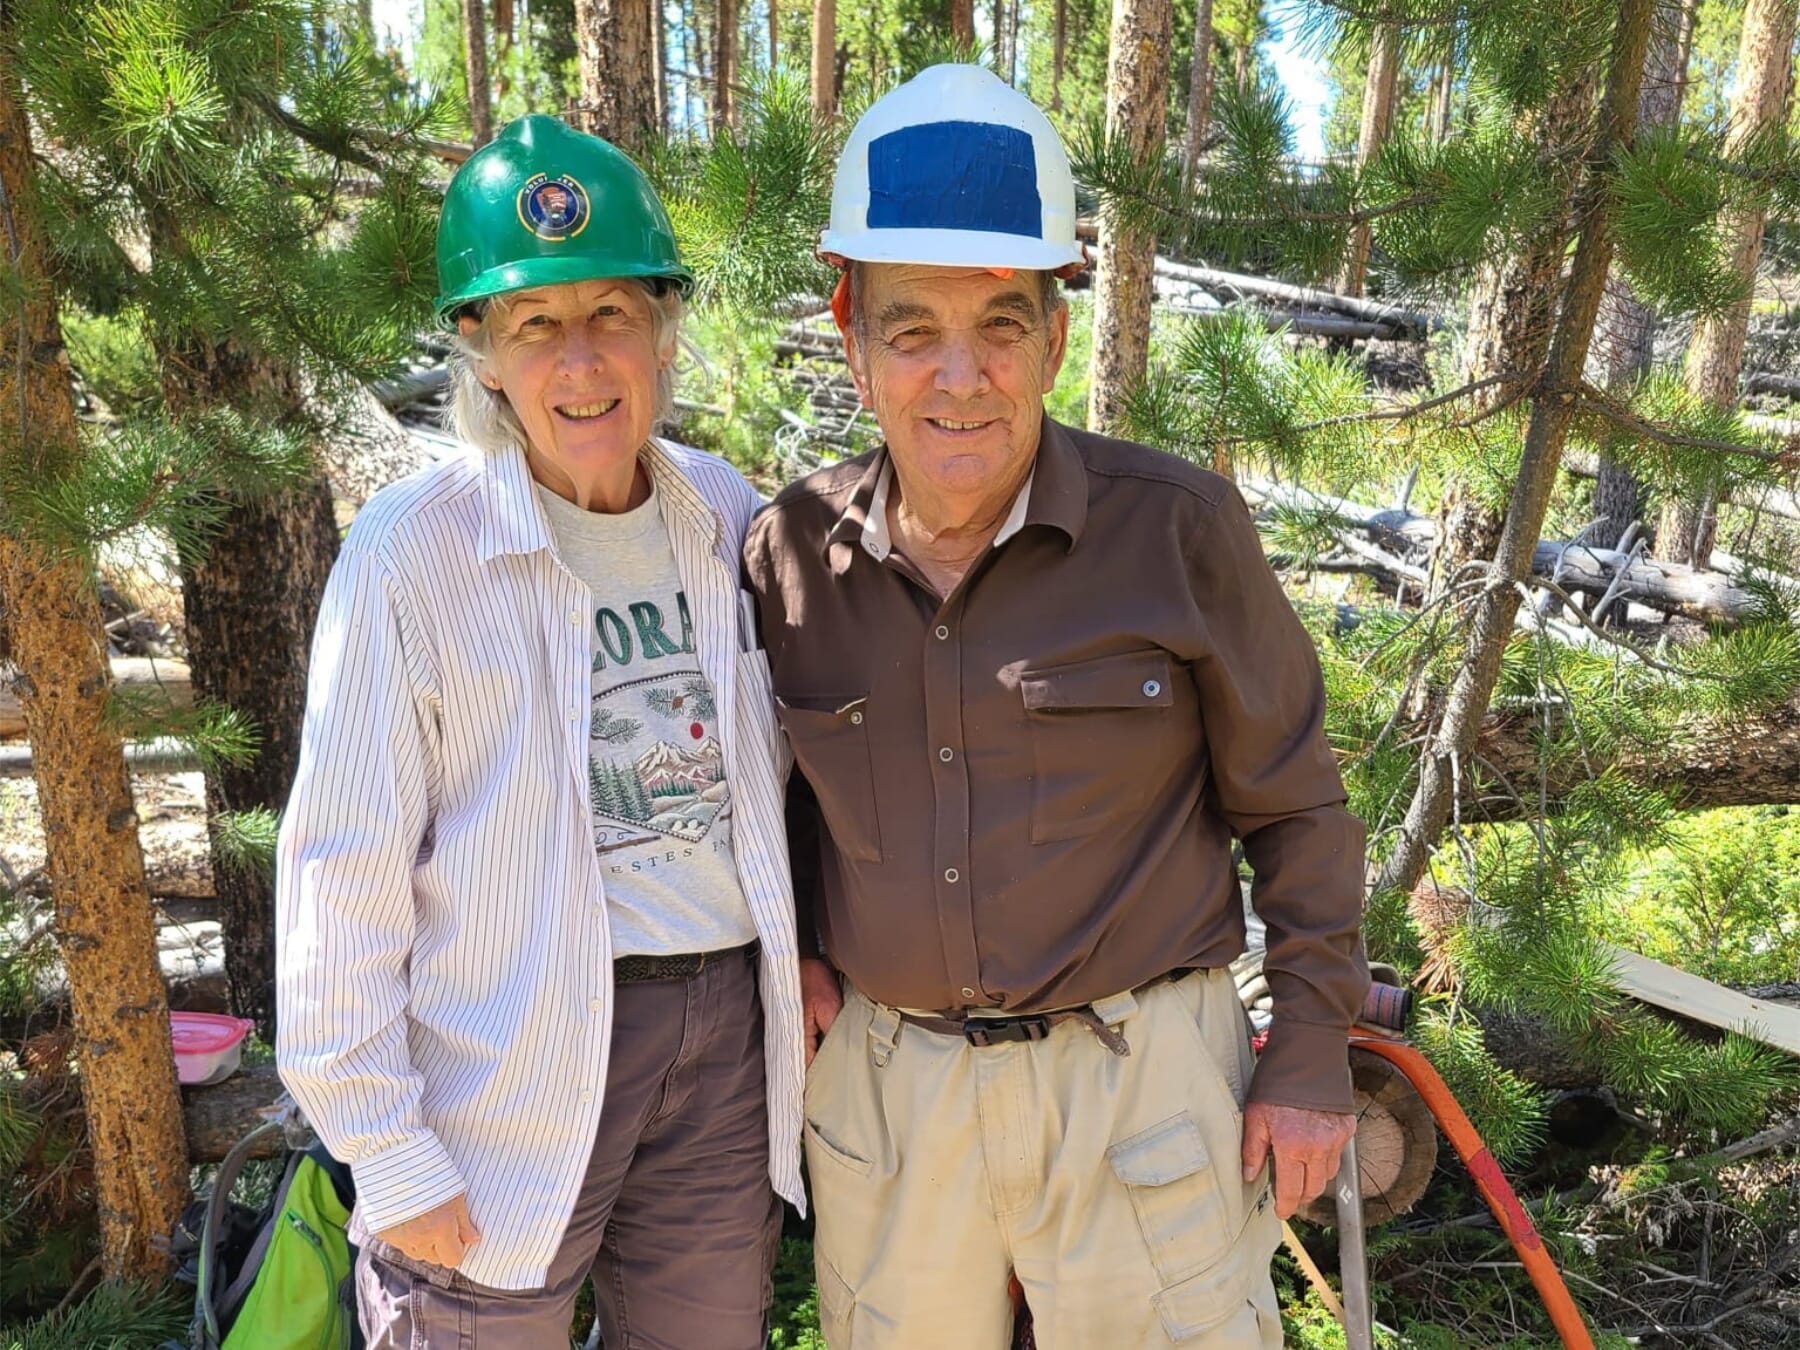 Appreciation for Trail Maintenance Volunteers